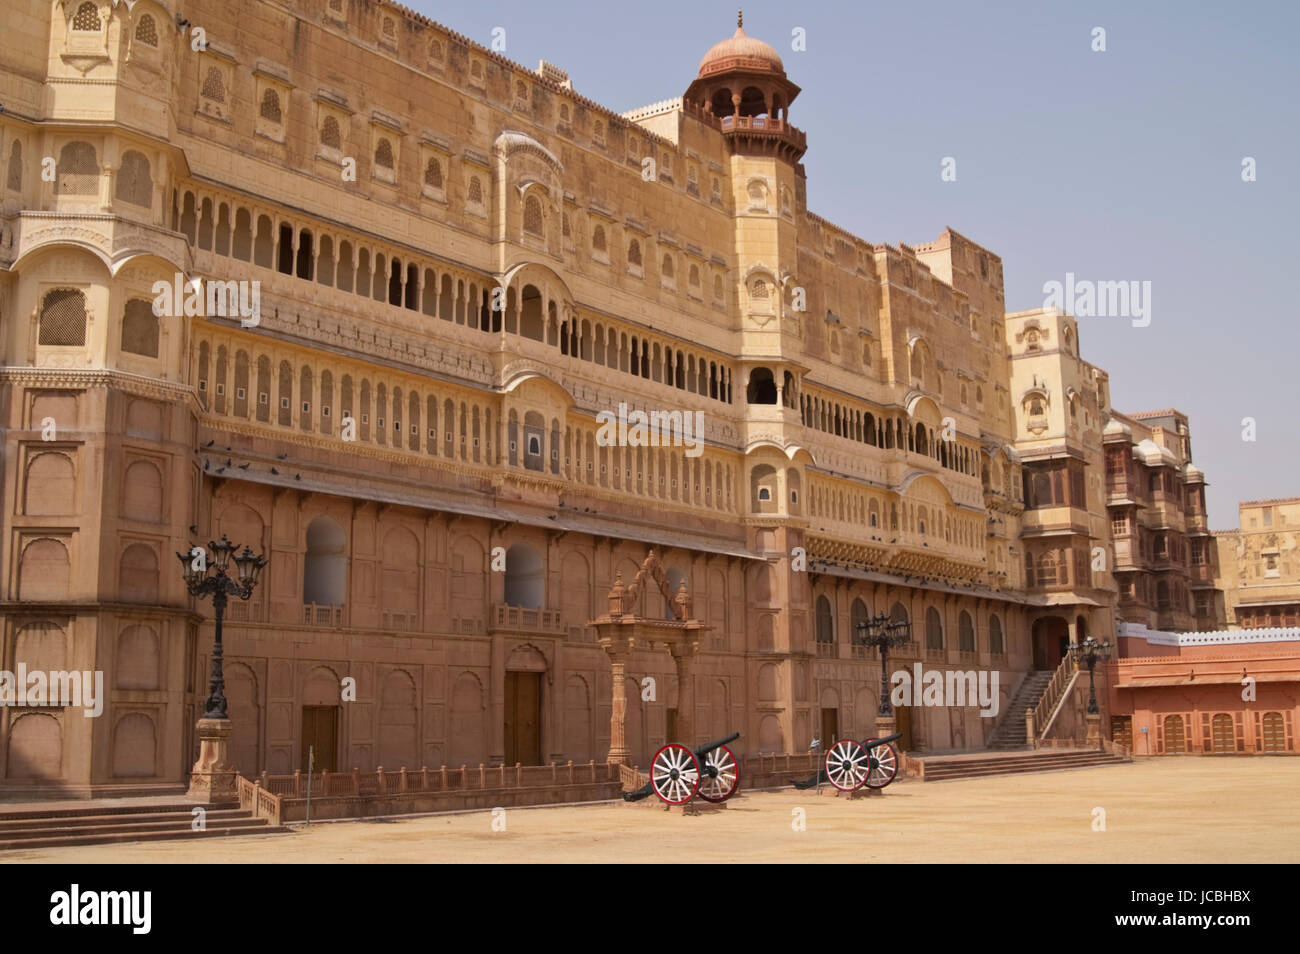 Imposing palace of the Maharajah of Bikaner inside Junagarh Fort, Bikaner, Rajasthan, India. Stock Photo